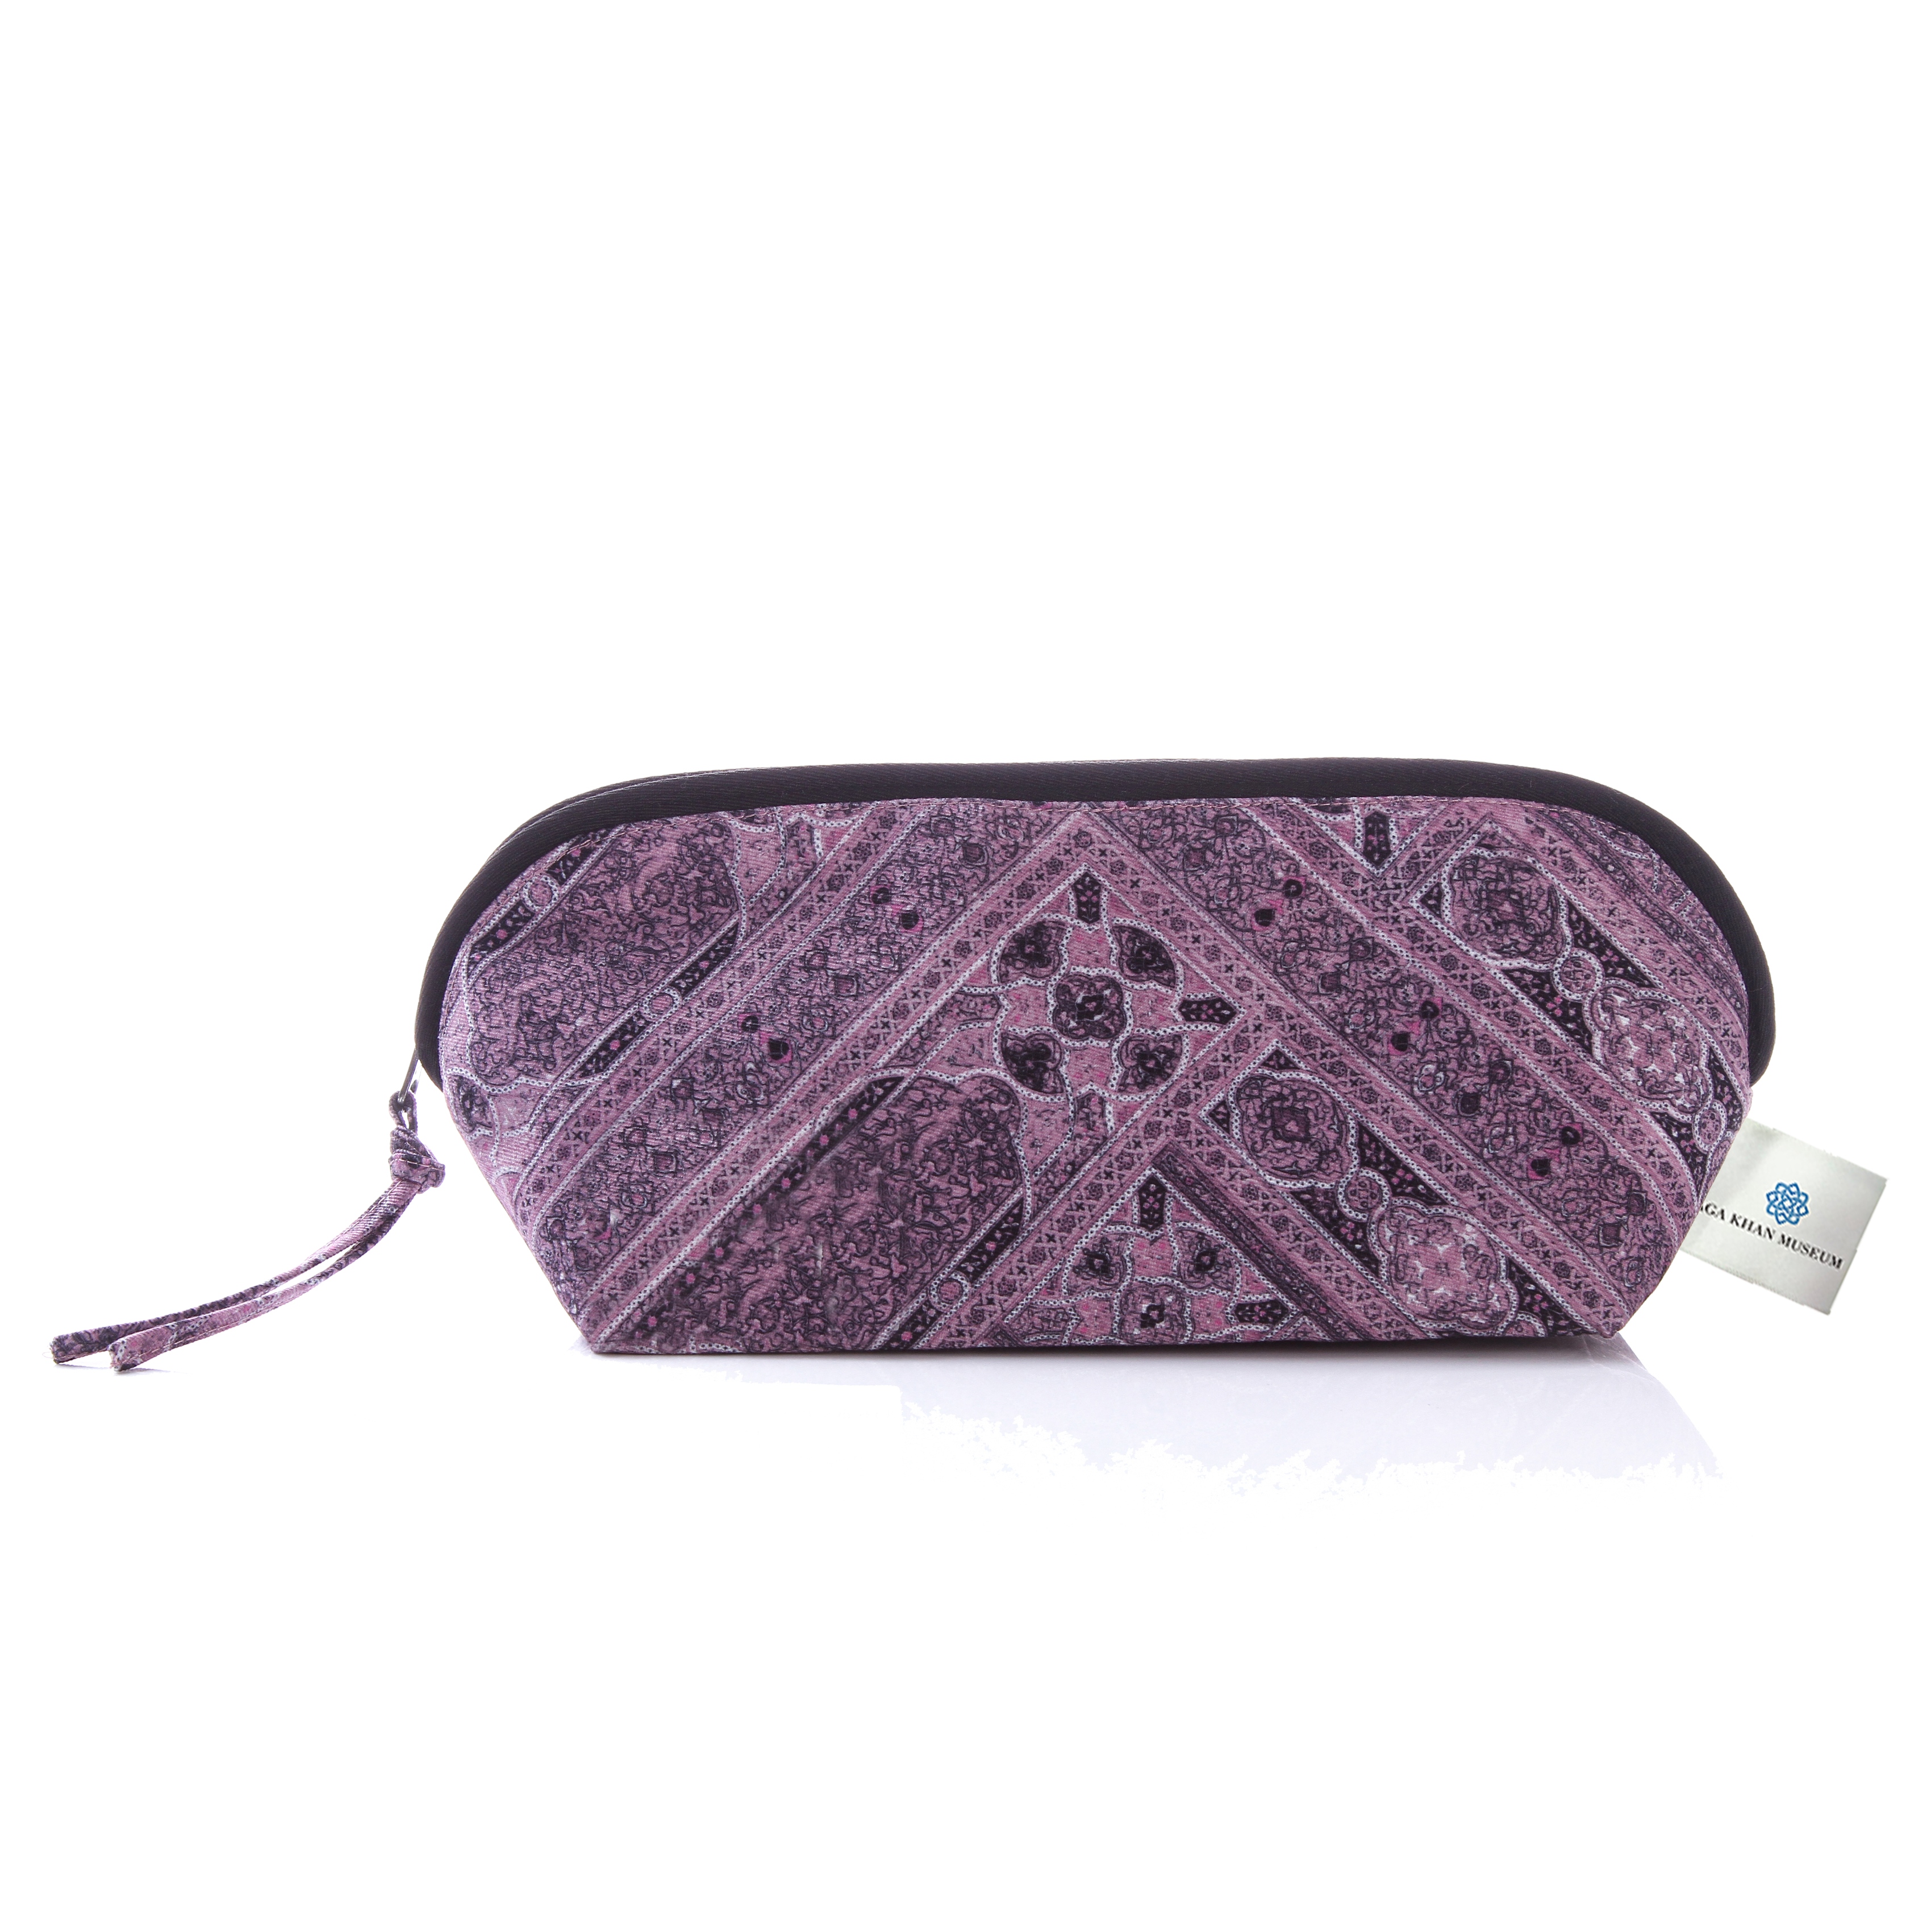 旅行包 - 3个回收水瓶 - 薰衣草紫色｜AKM Shahnameh Travel Bag - 3 Recycled Water Bottles - Lavender